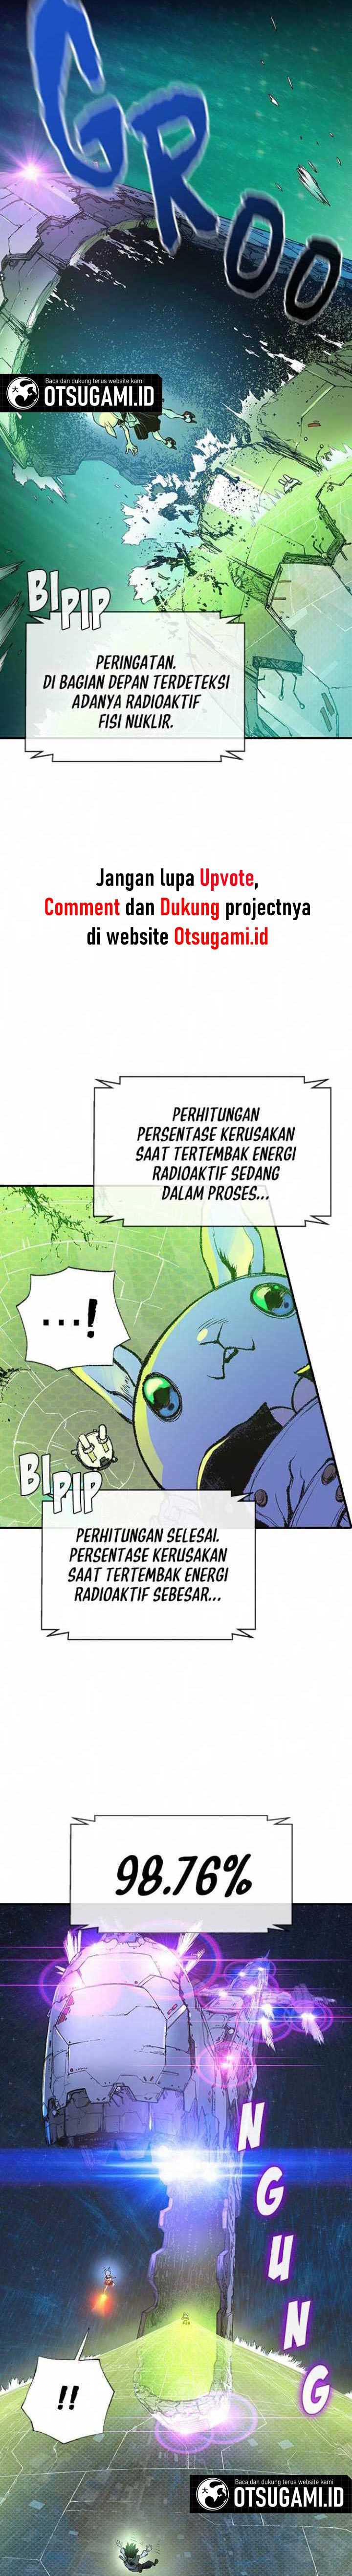 Super String: Isekai Kenbunroku (webtoon) Chapter 9